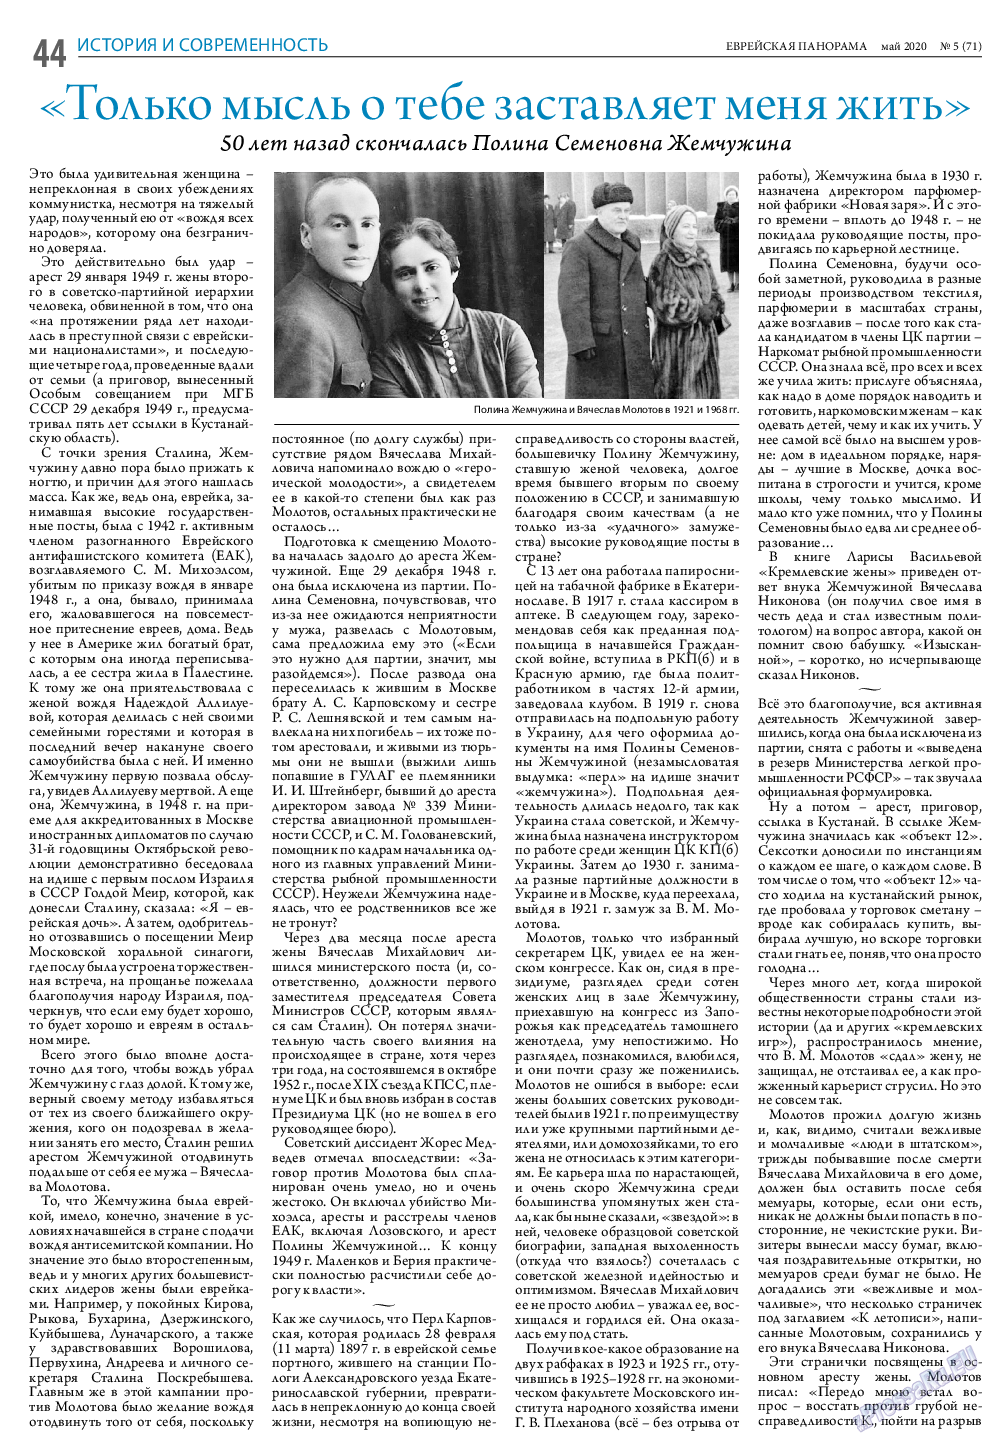 Еврейская панорама, газета. 2020 №5 стр.44